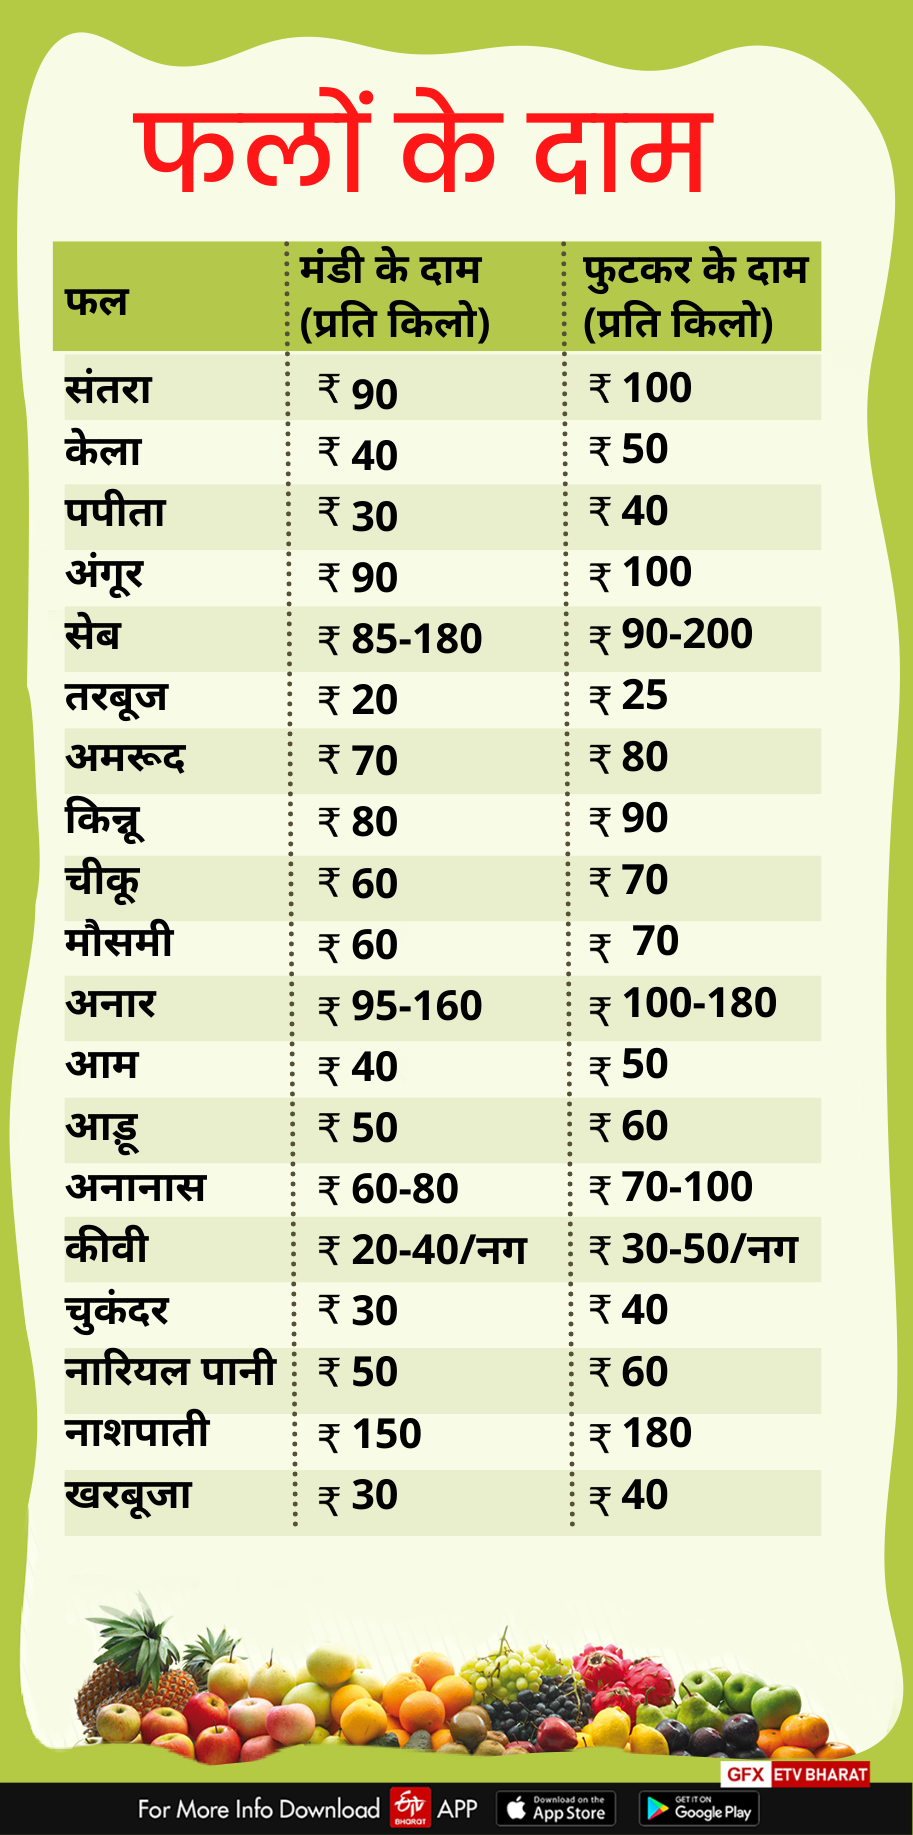 dehradun vegetables price